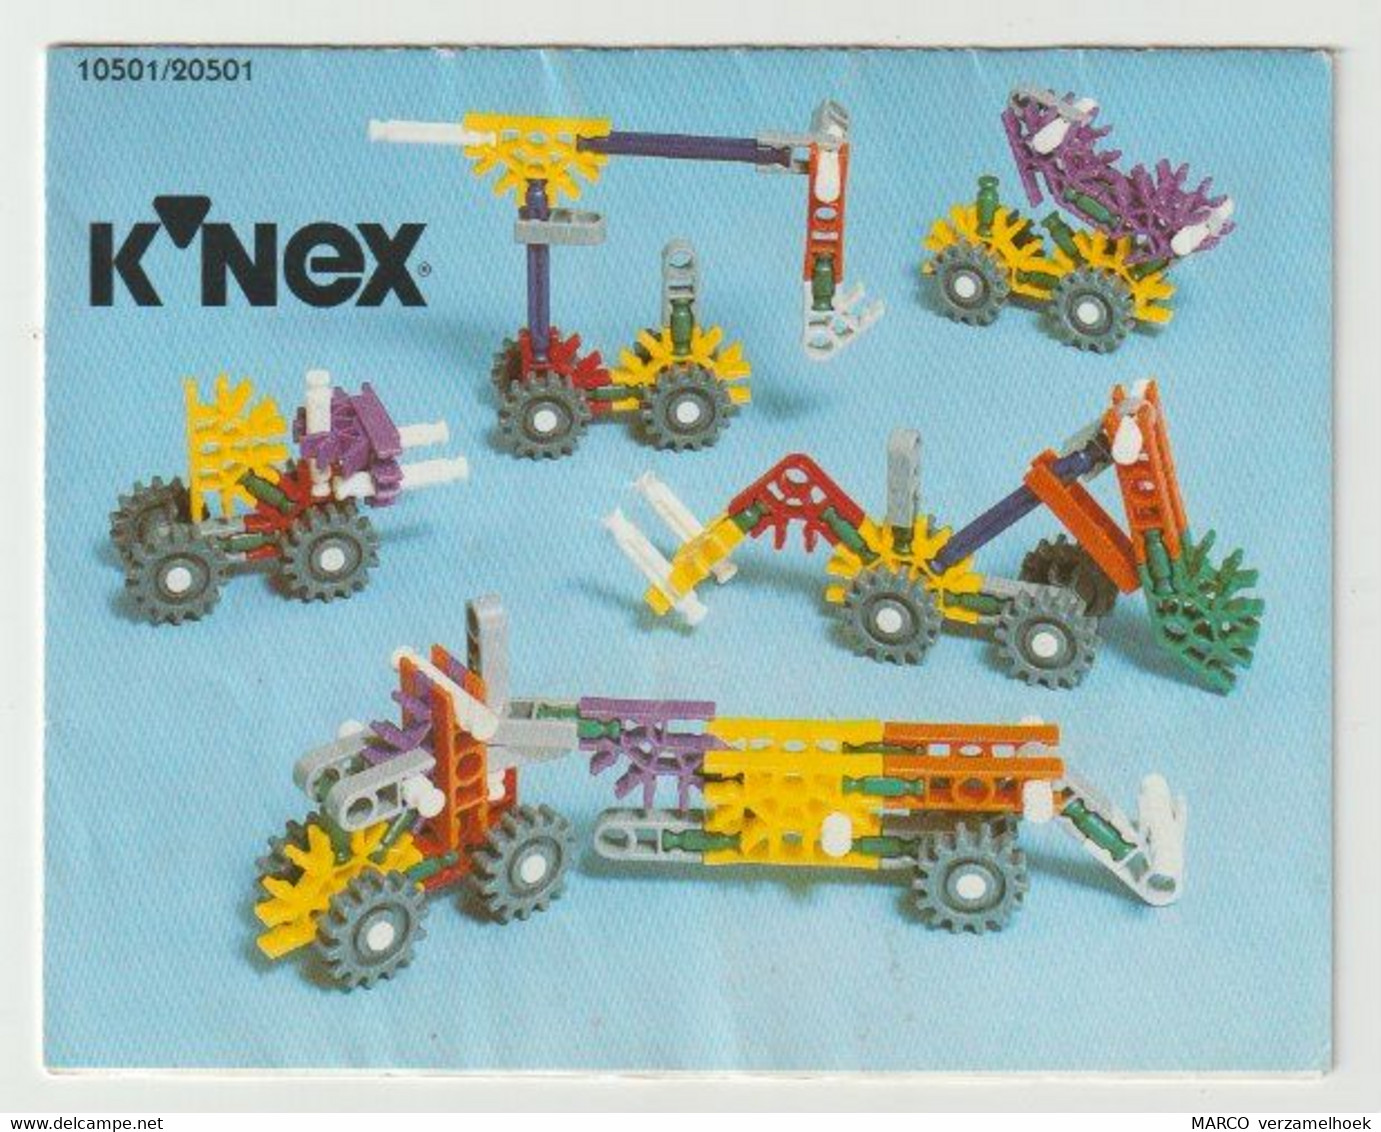 K'NEX Brochure-leaflet 10501/20501 - K'nex